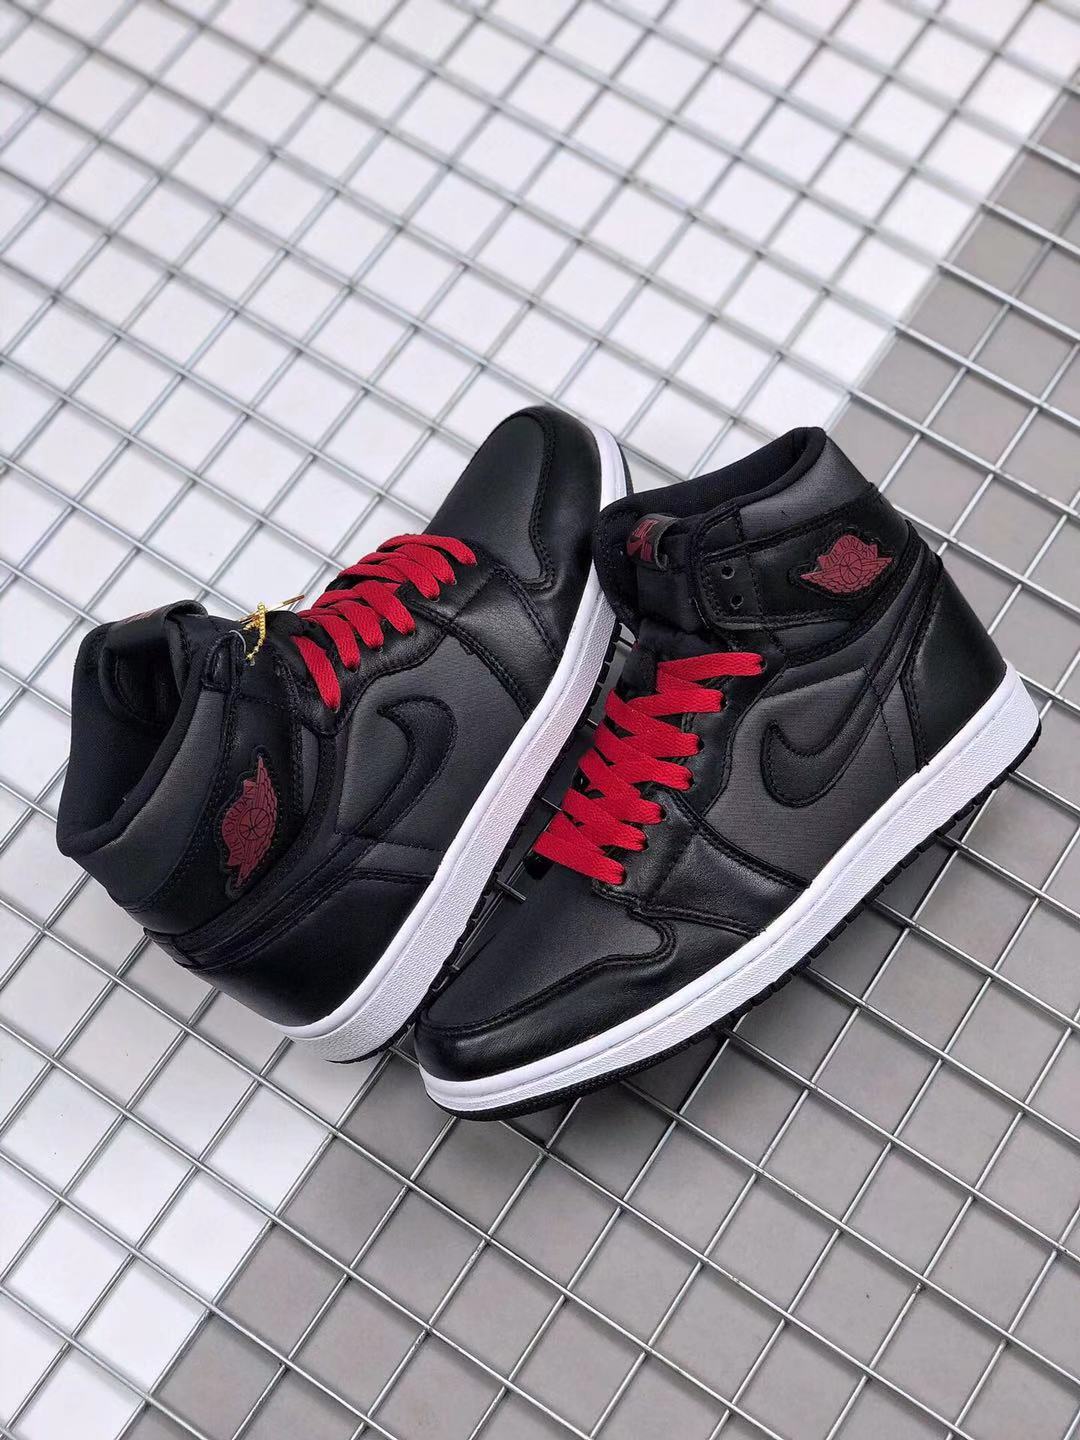 2020 Air Jordan 1 High OG Black Satin Shoes